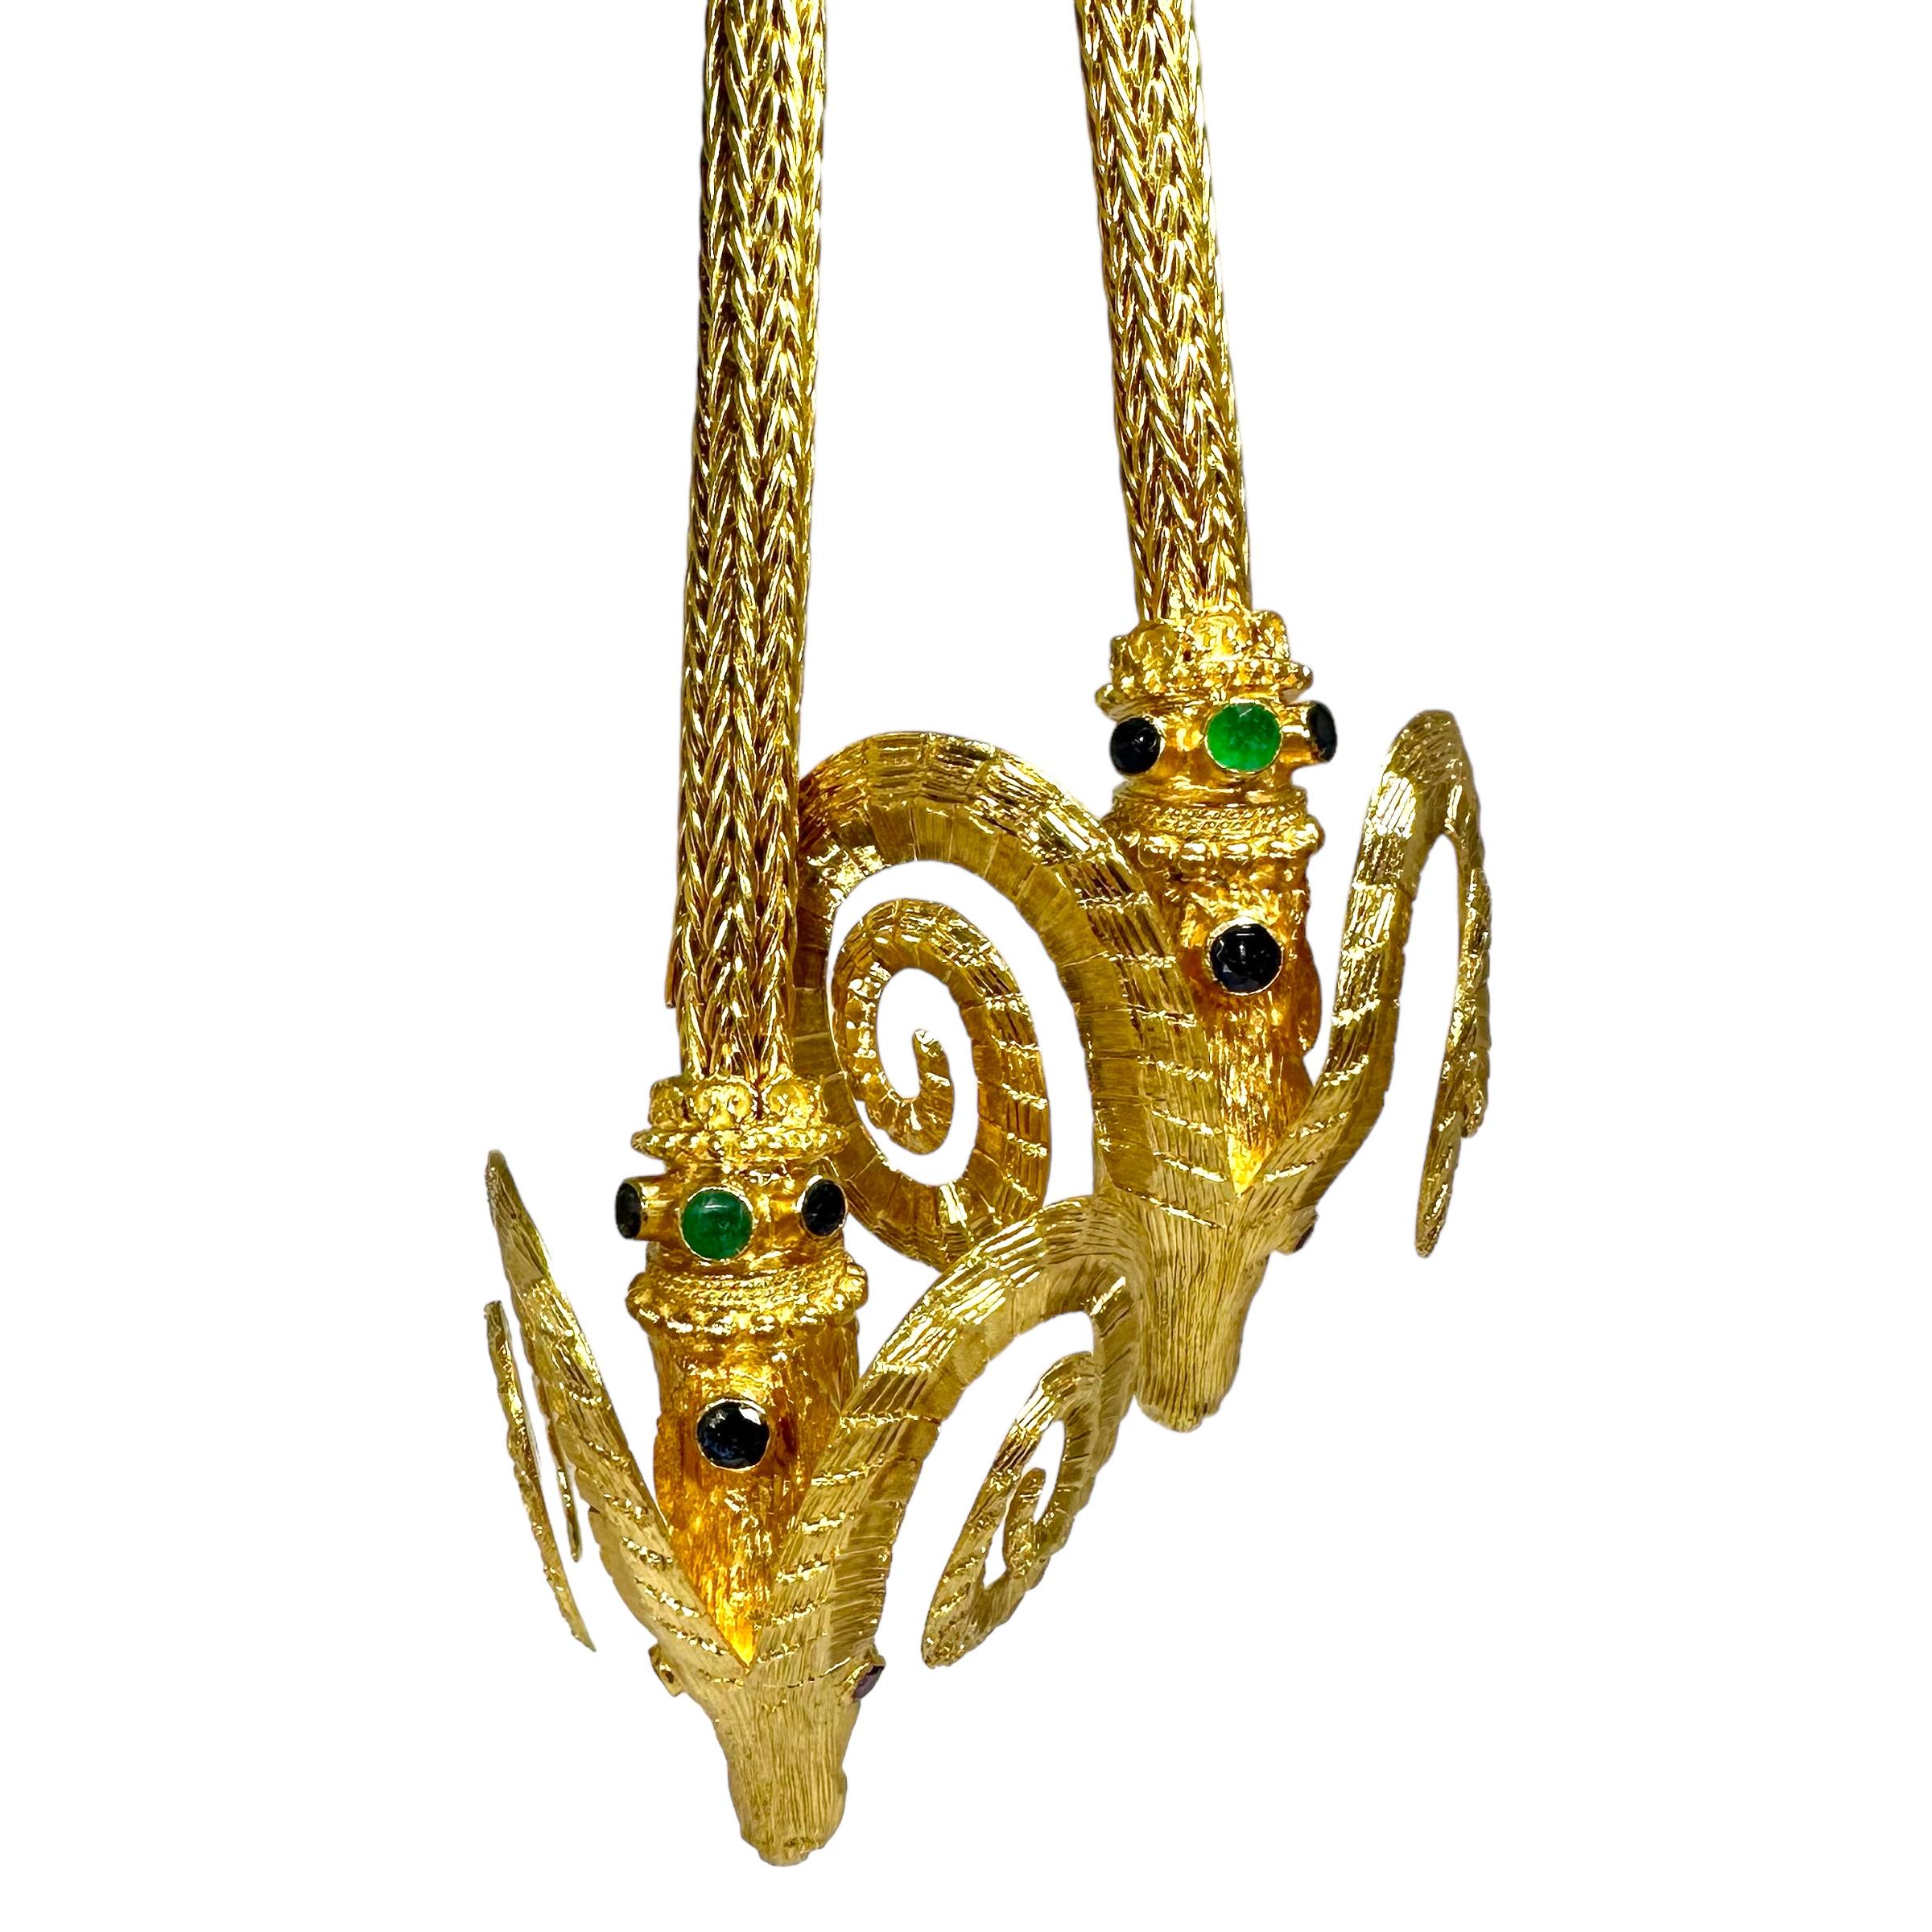 Monumentale Lalaounis 18k Gold Doppelter Widderkopf-Halskette in Monumentalgröße 38 Zoll lang im Angebot 4